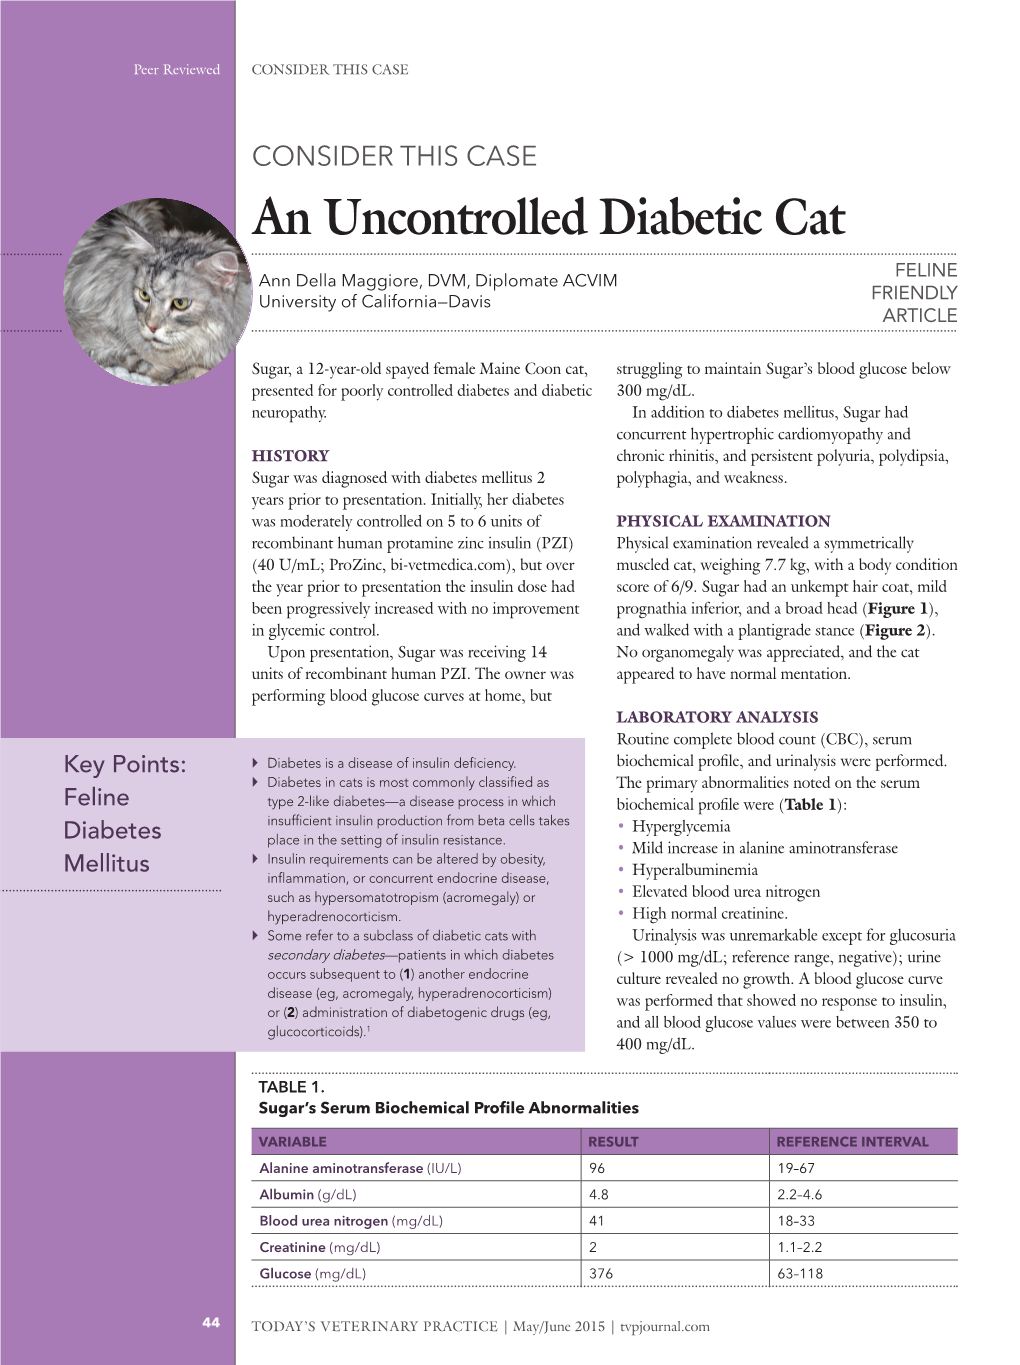 An Uncontrolled Diabetic Cat Feline Ann Della Maggiore, DVM, Diplomate ACVIM University of California—Davis Friendly Article